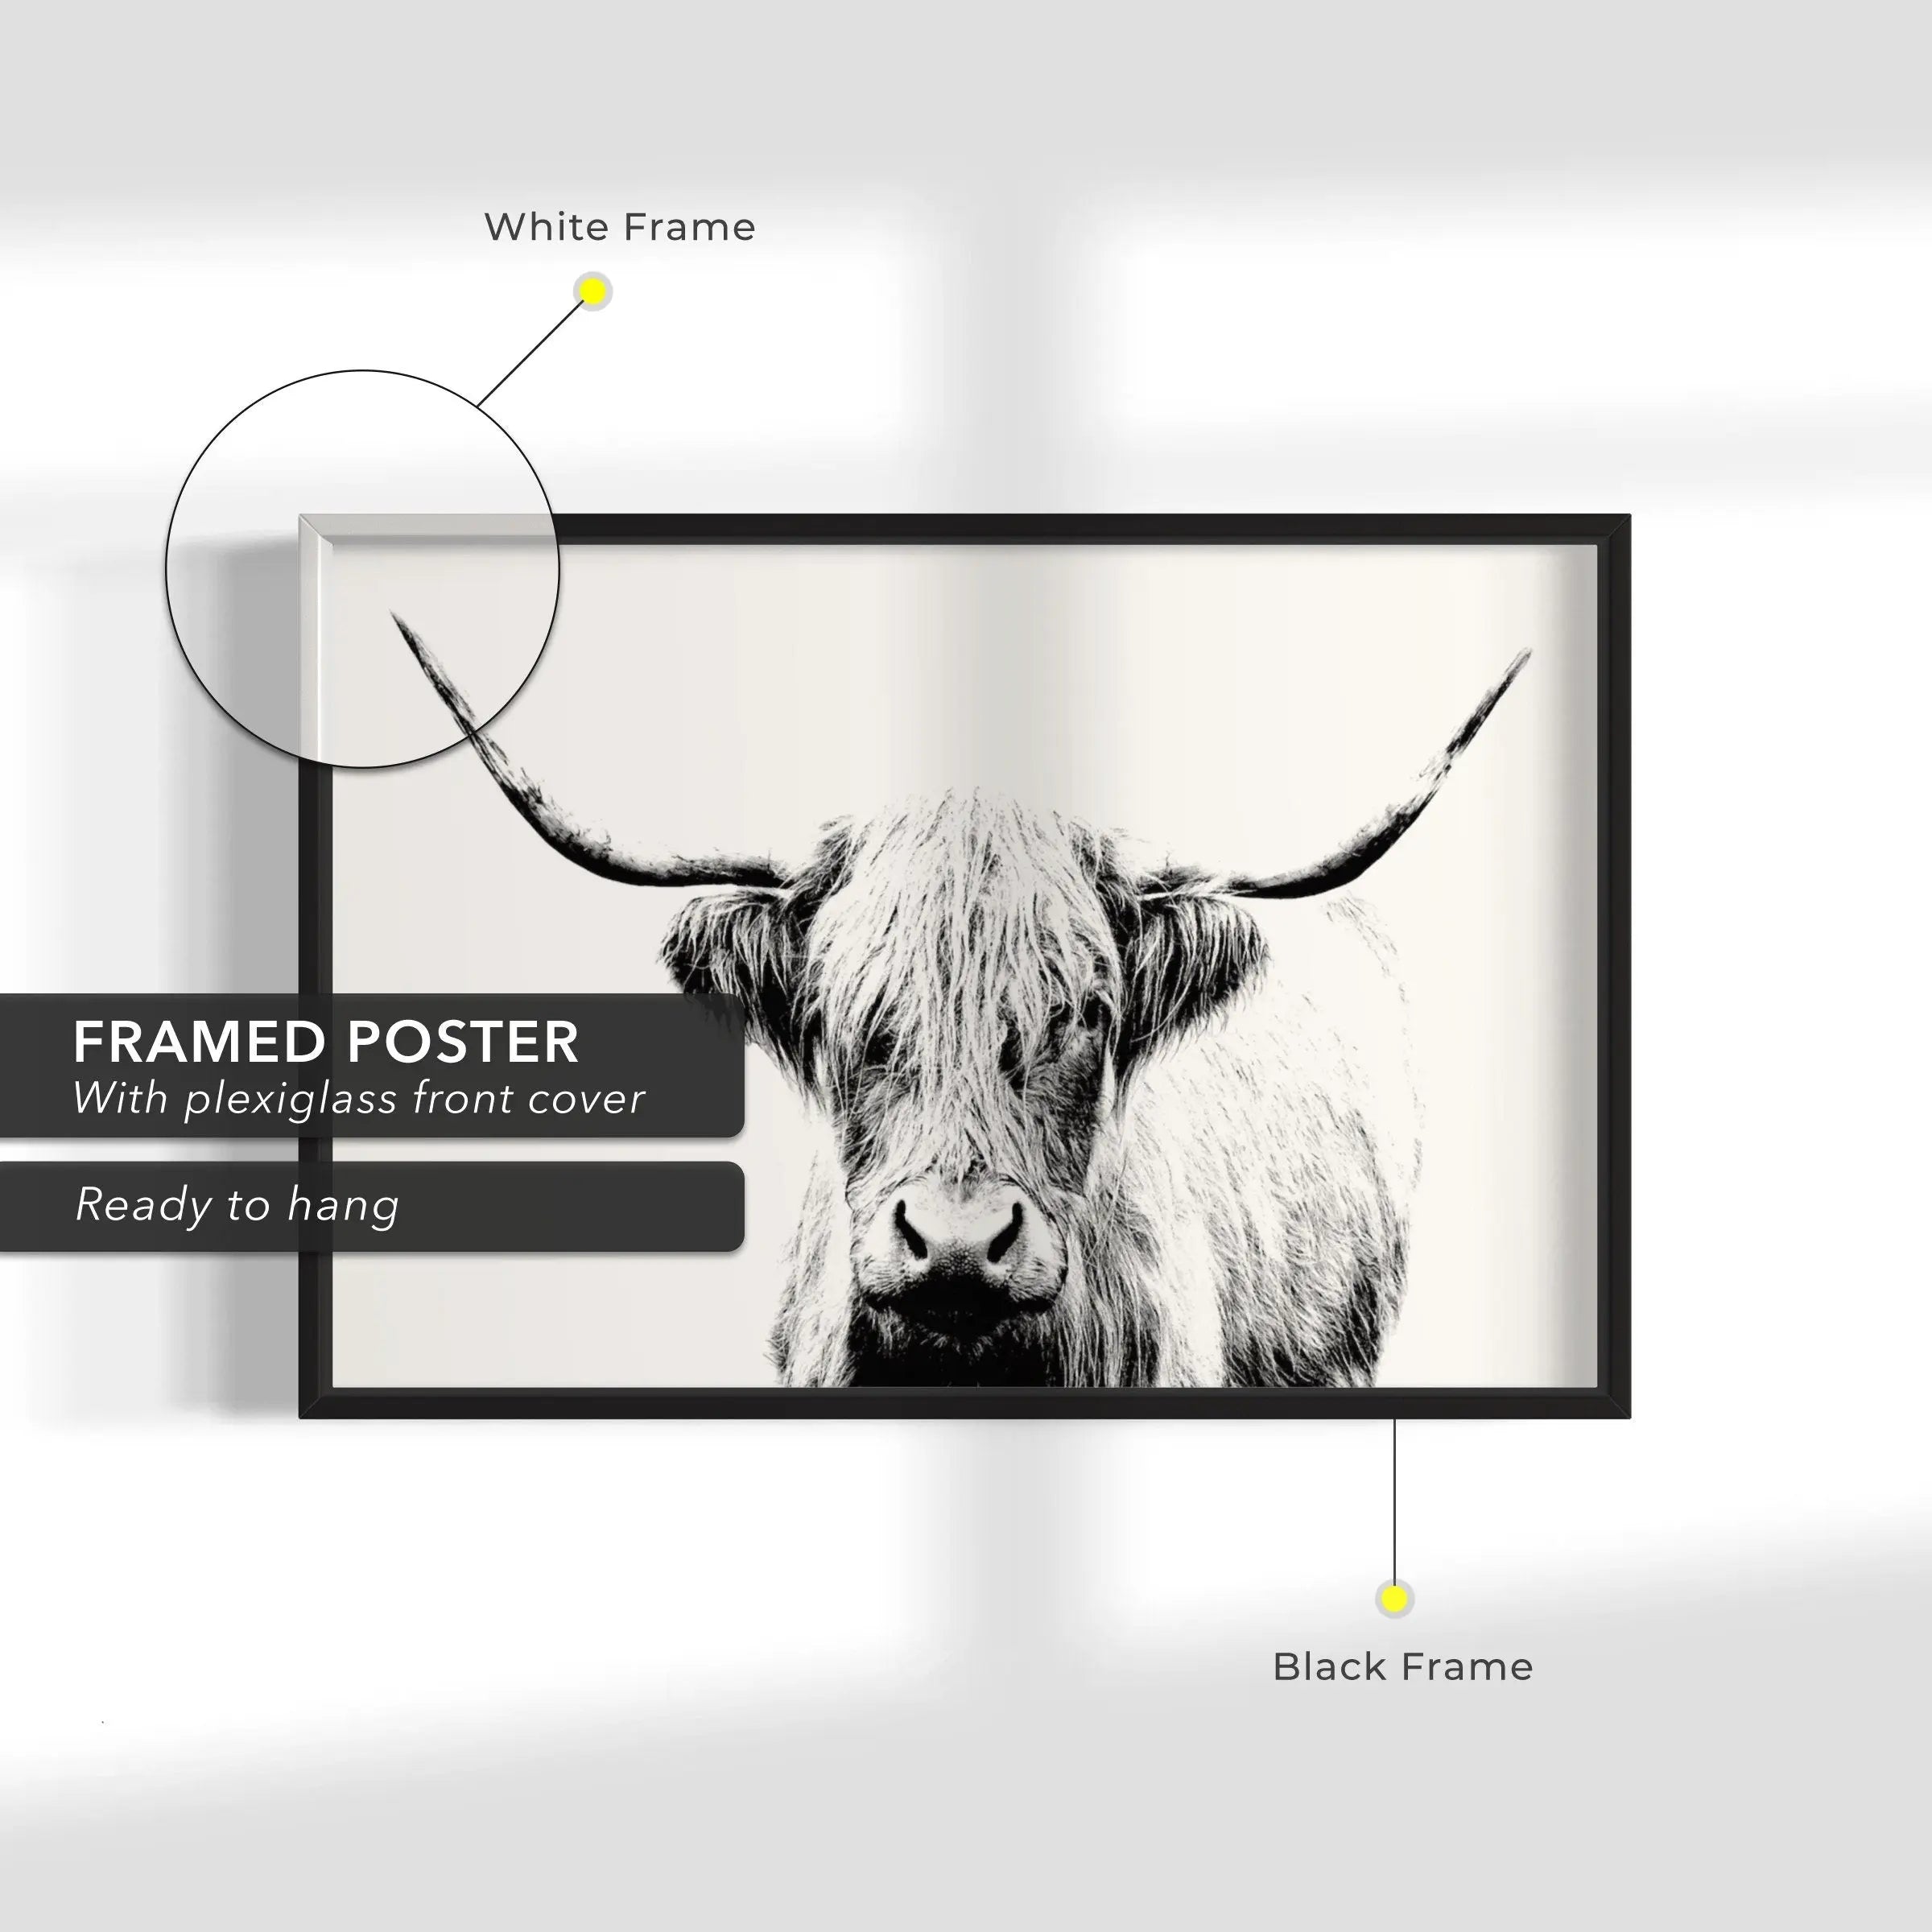 Cow Horn Black & White Art Photo Canvas Wall Art | Poster Print Canvastoria